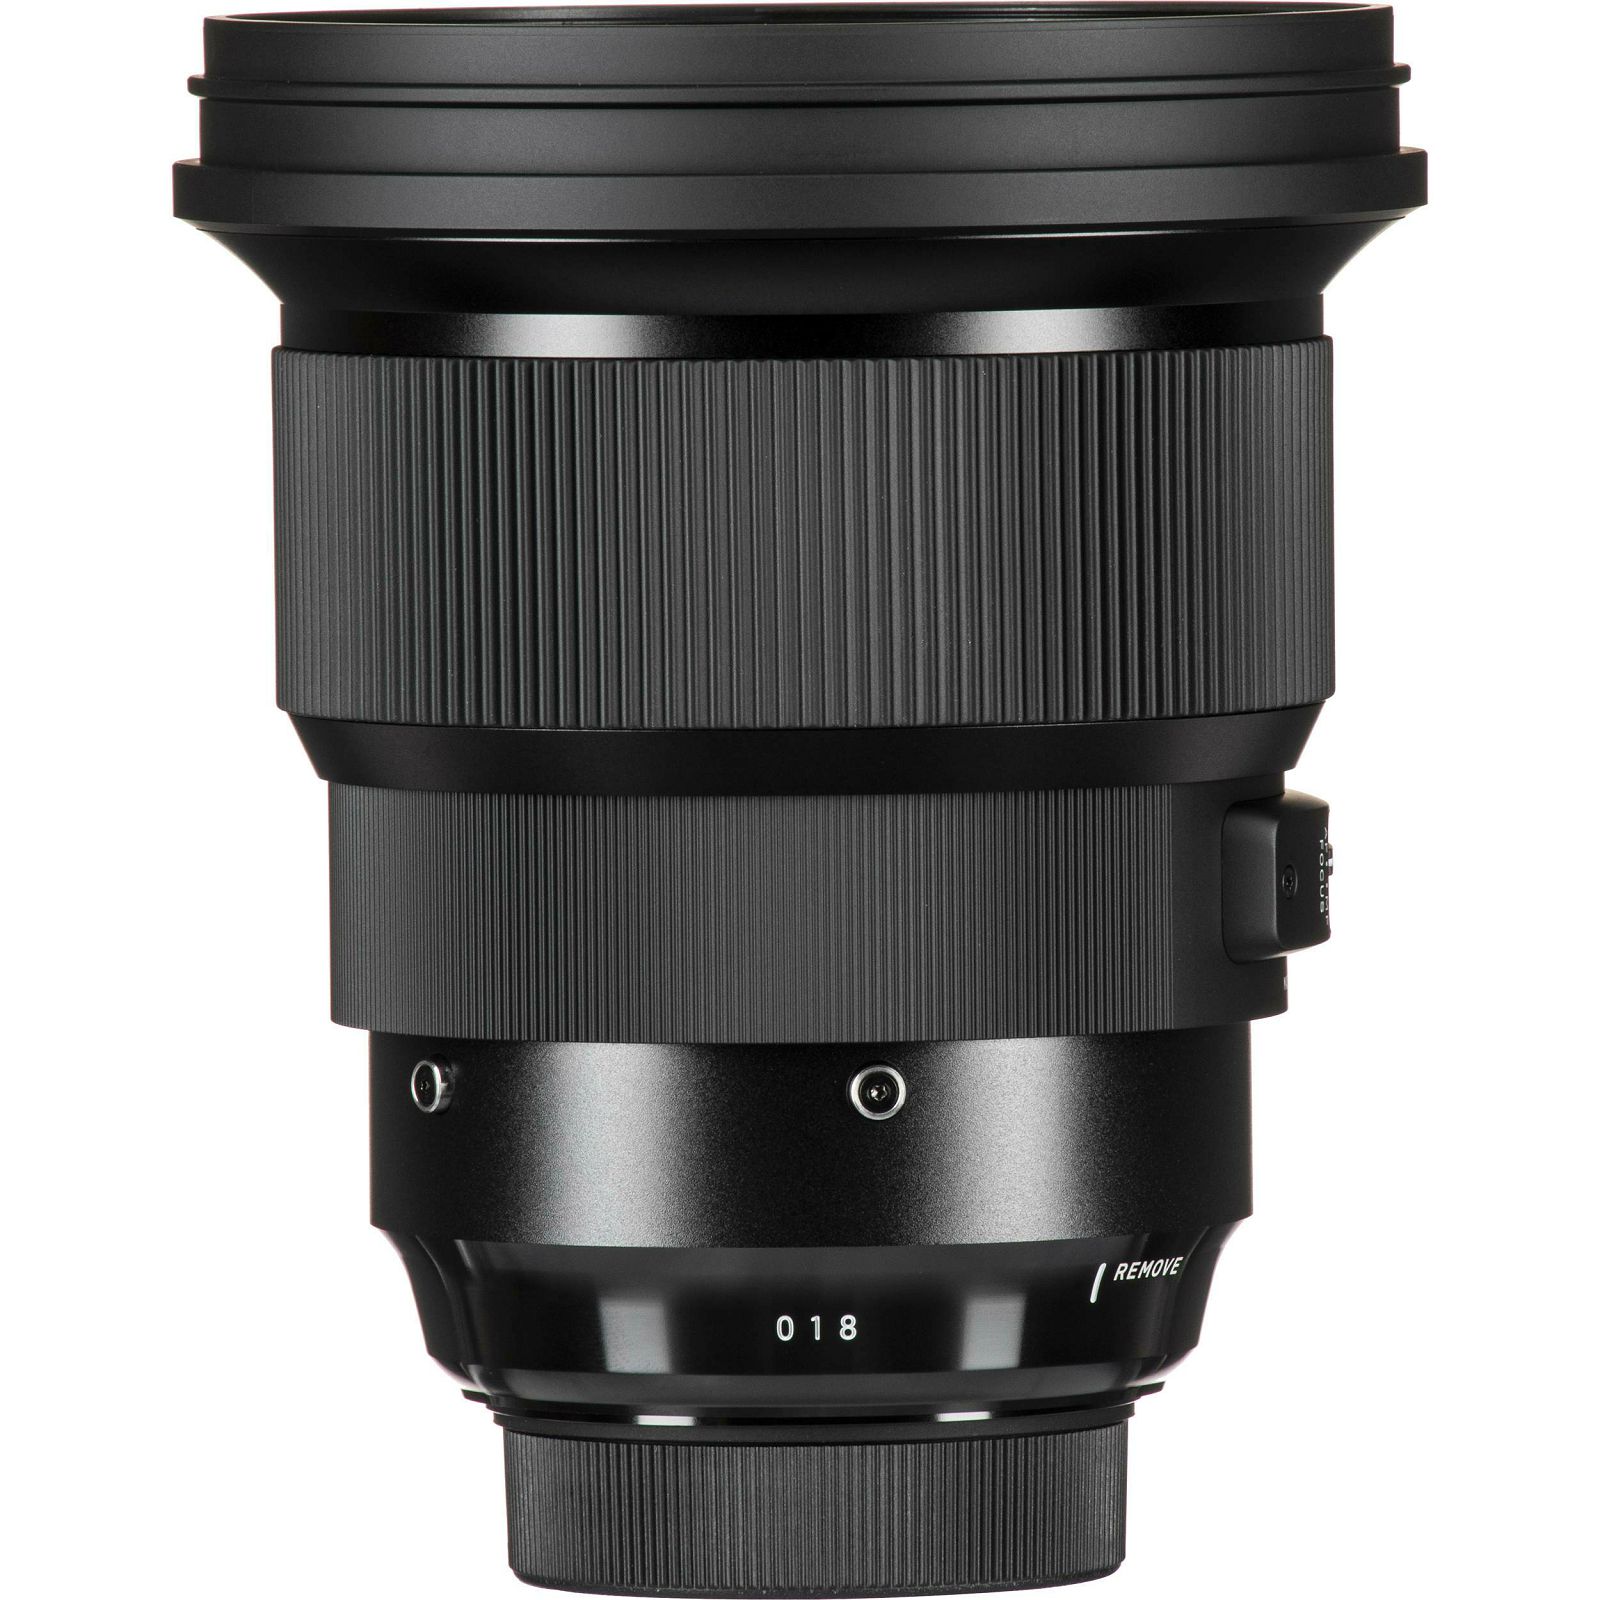 Sigma 105mm f/1.4 DG HSM ART objektiv za Panasonic Leica L-mount